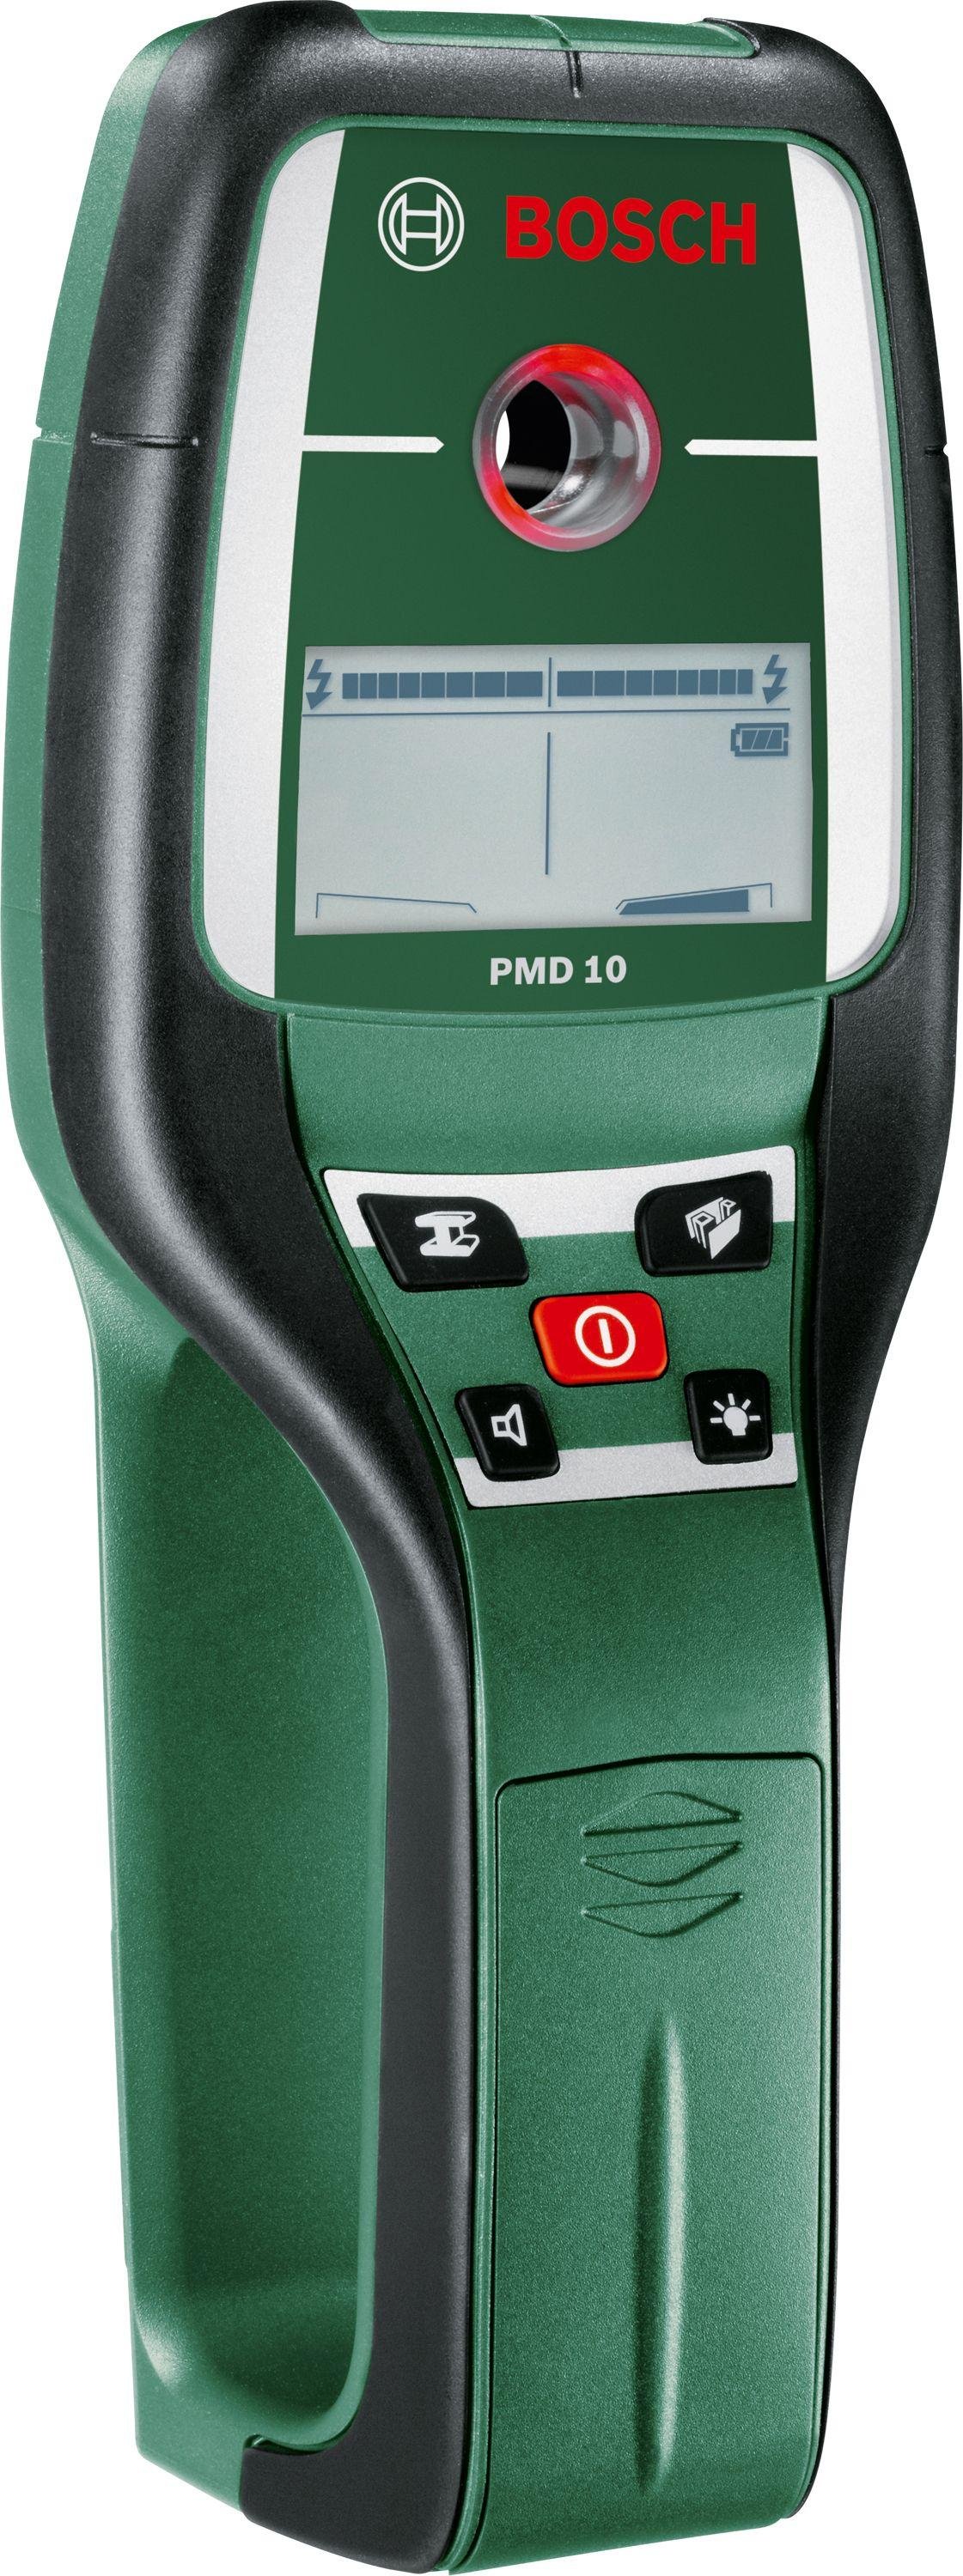 Bosch PMD 10 Multi Detector